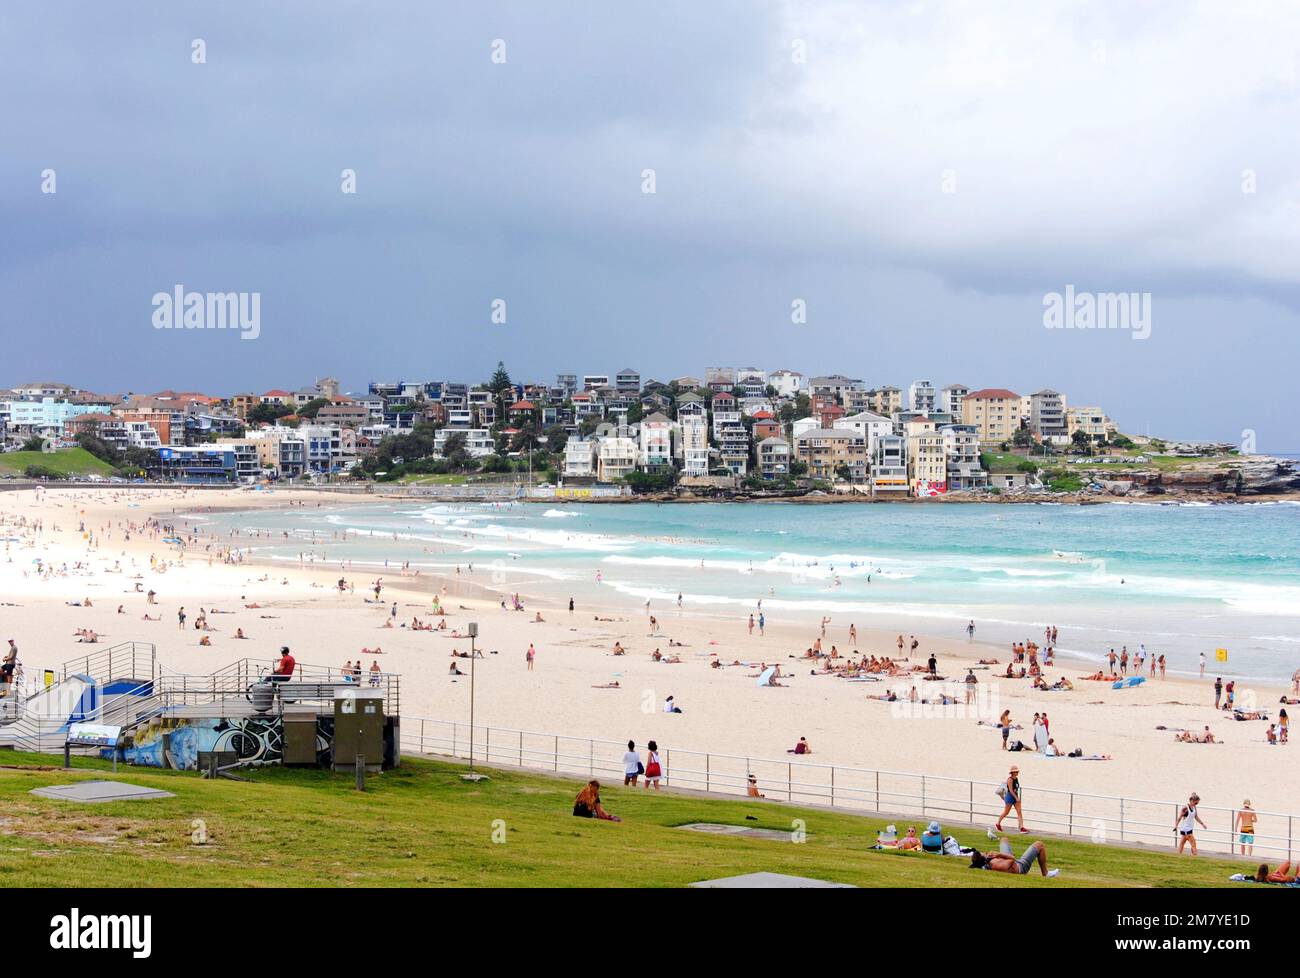 View of the beach. Bondi is one of Australia’s most iconic beaches. Stock Photo